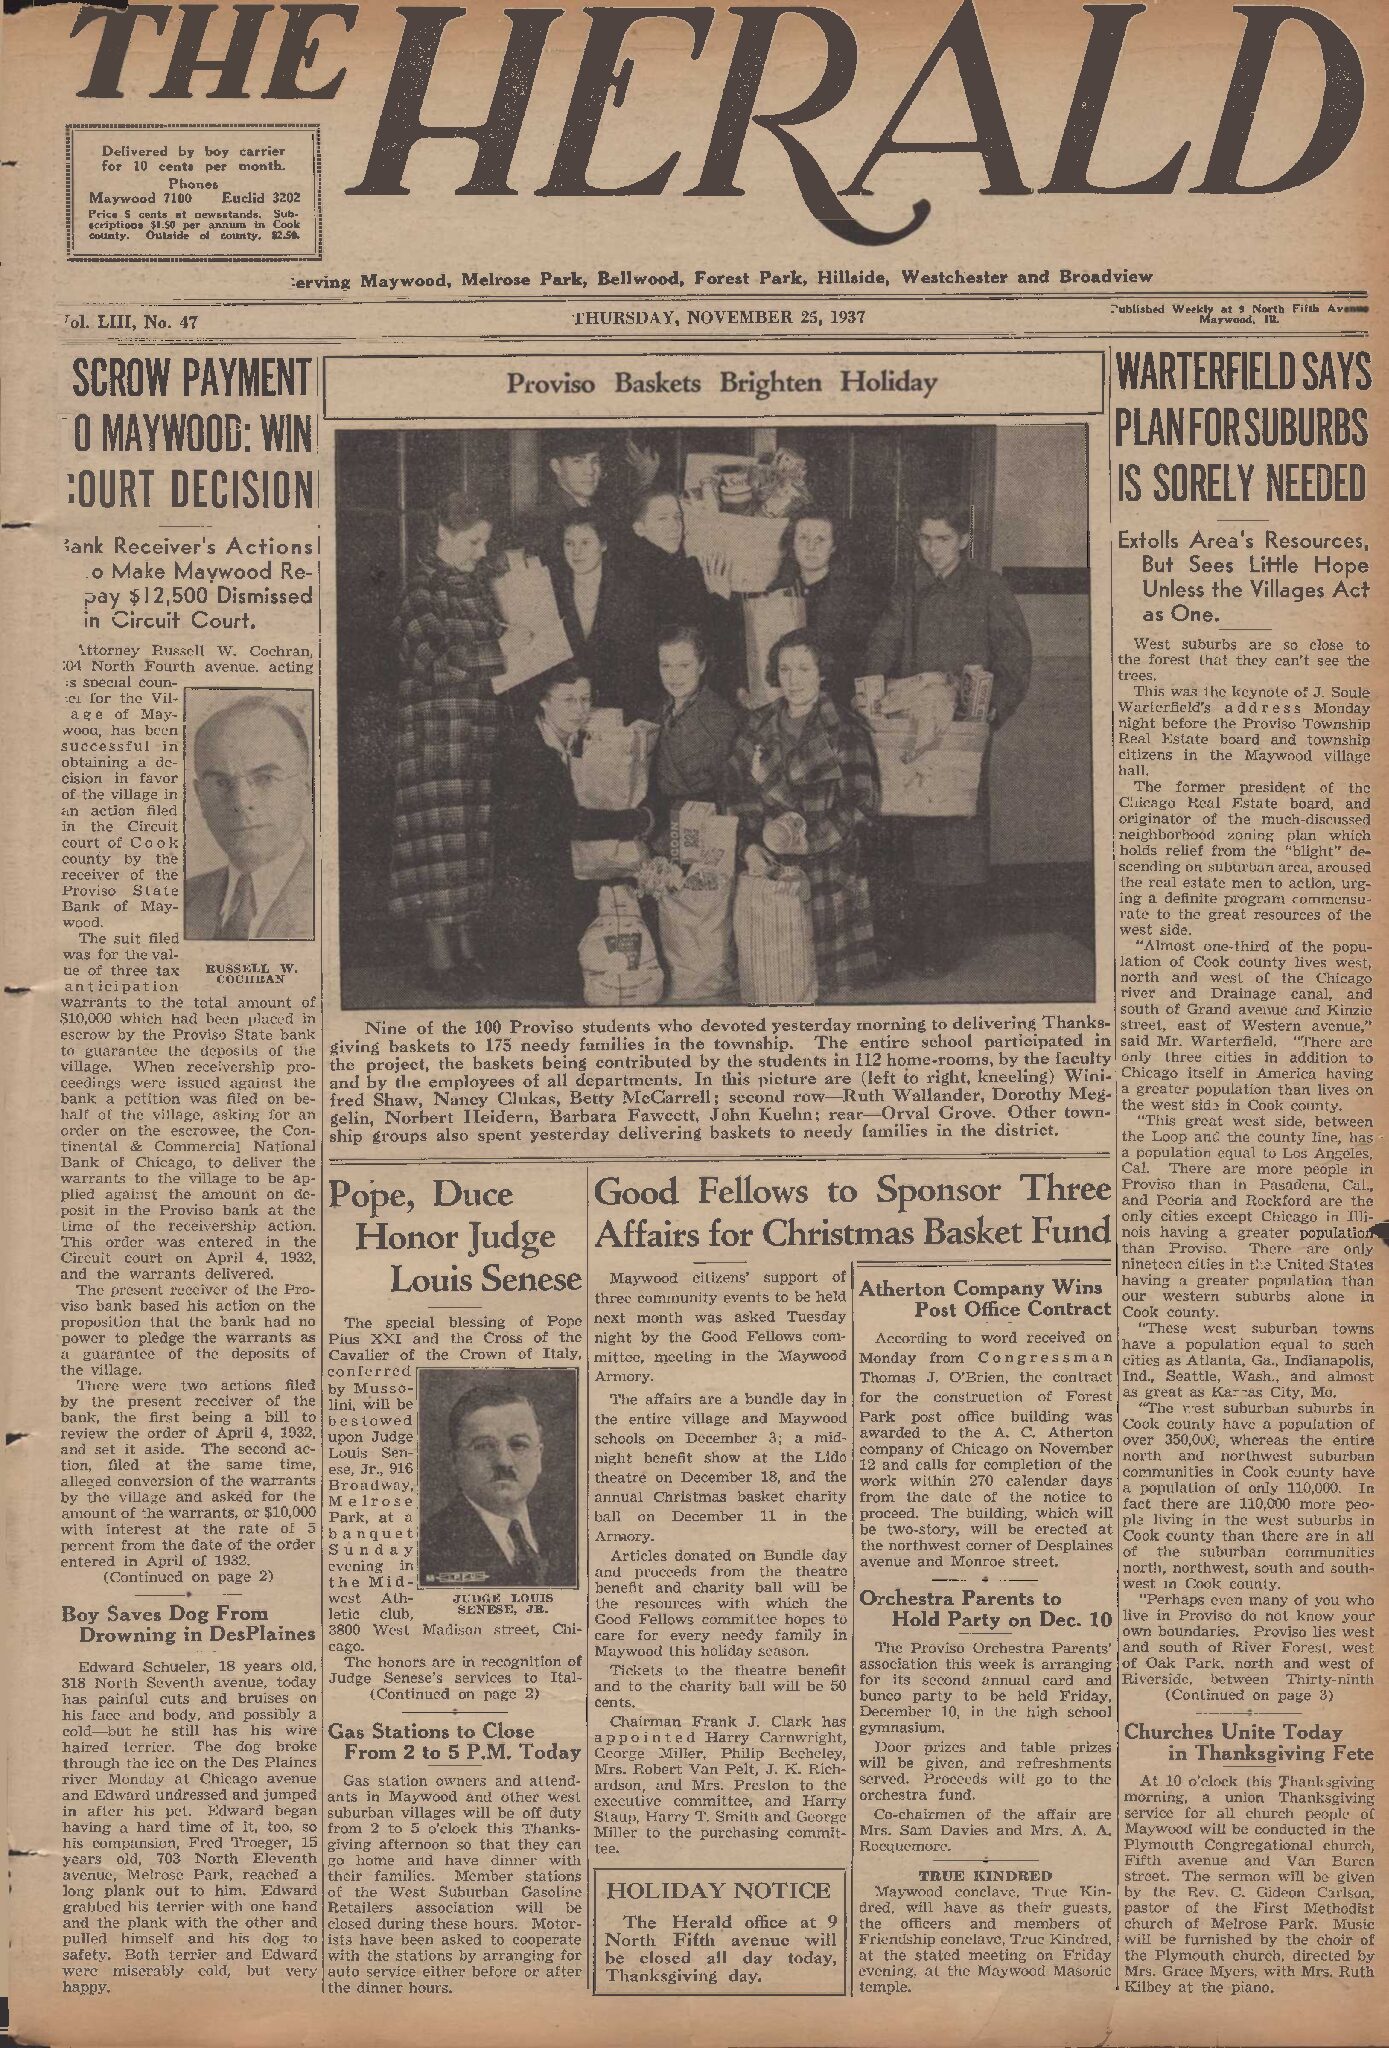 The Herald – 19371125